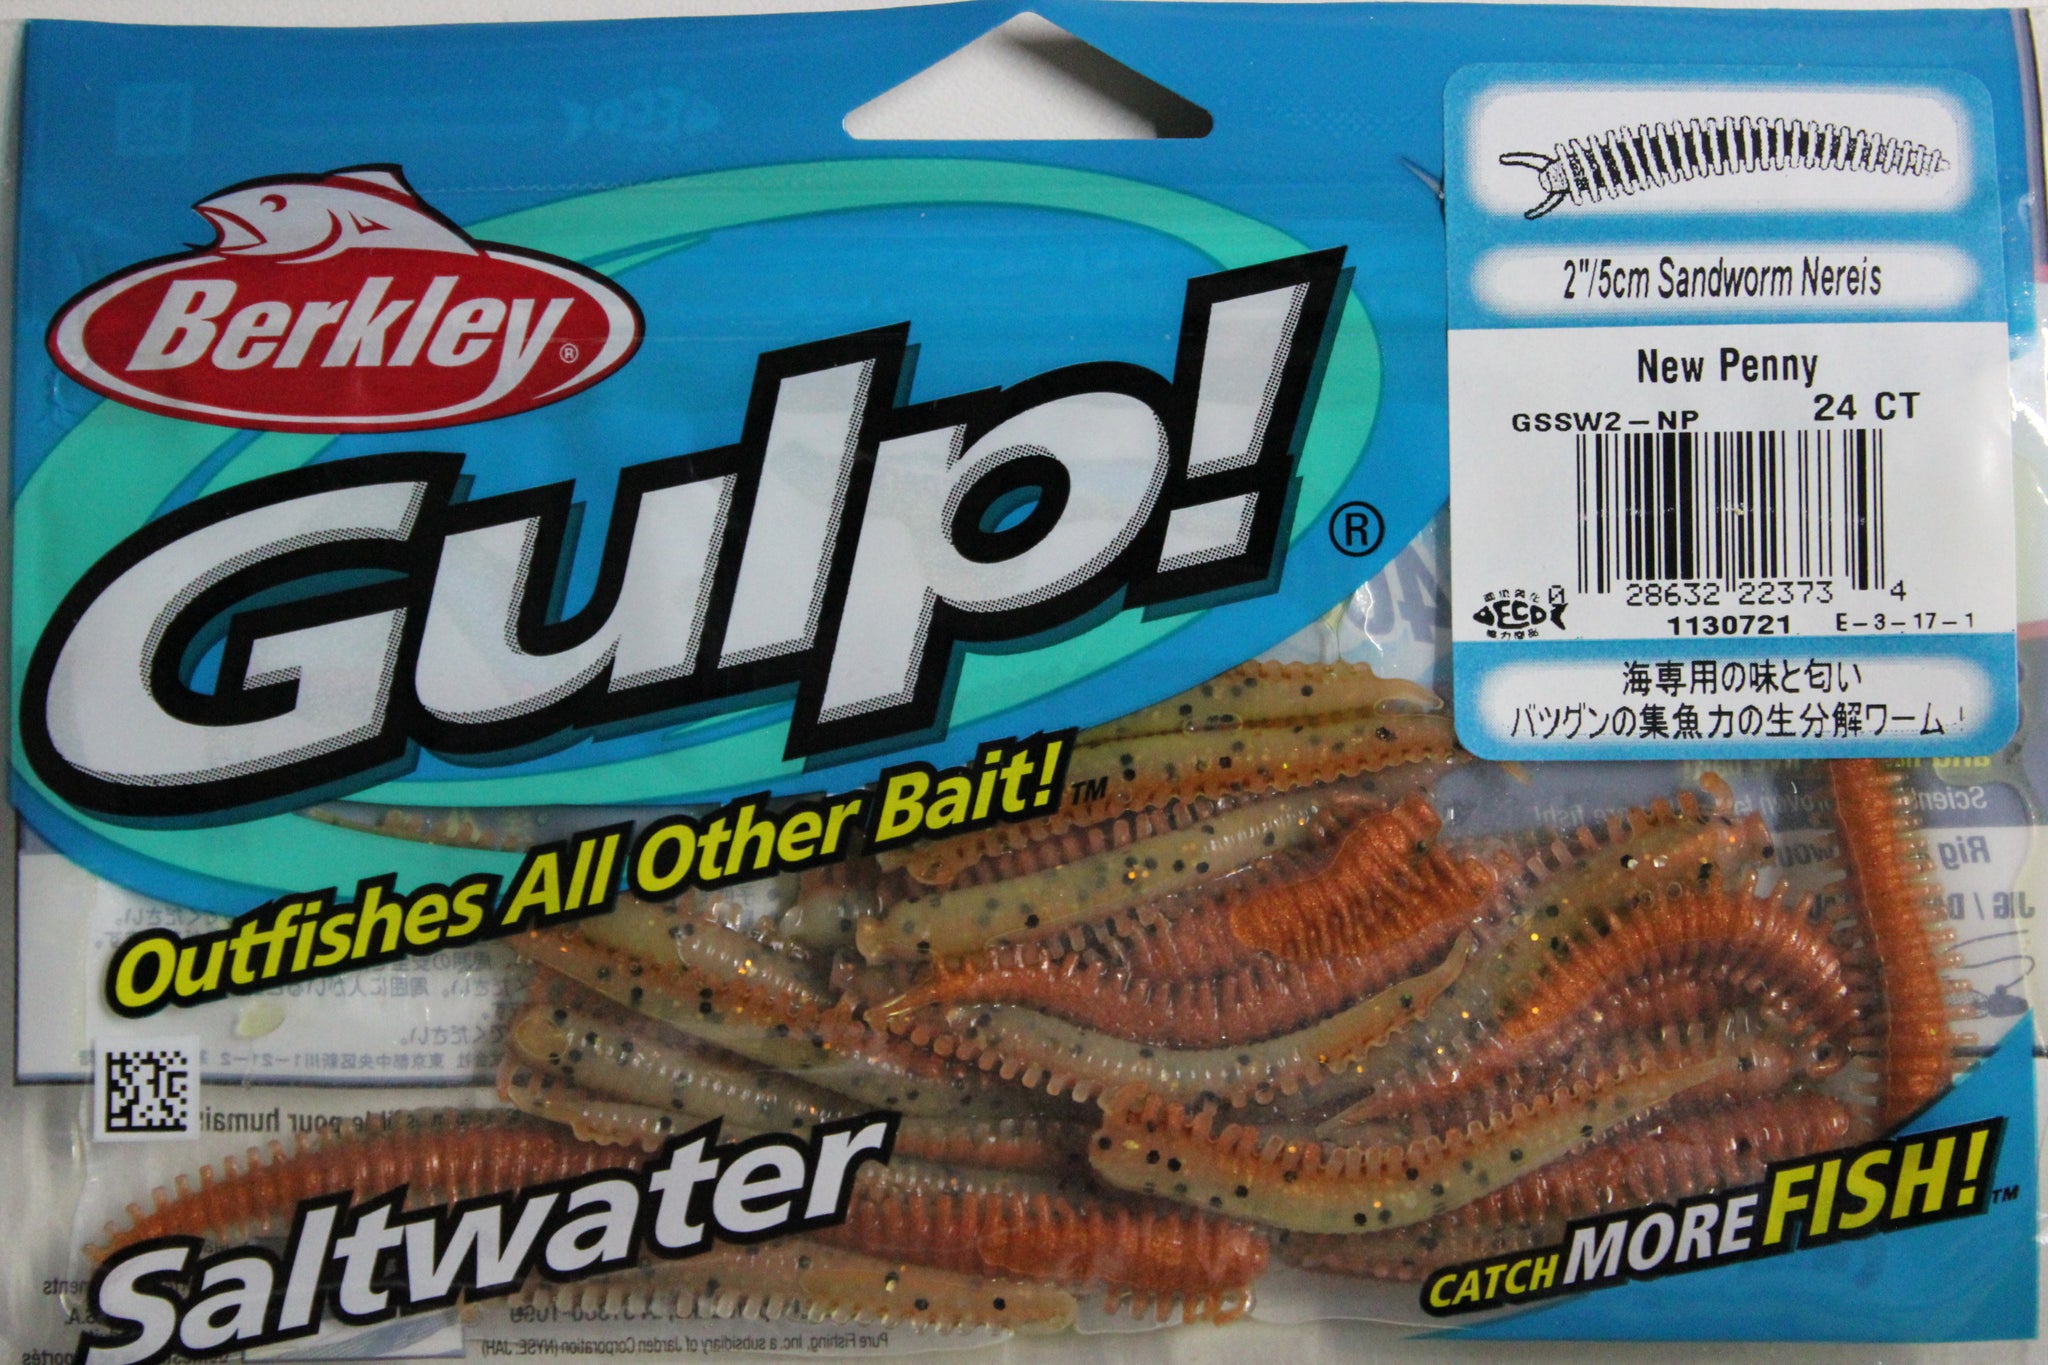 Berkley Gulp 2 Sandworm Nereis Saltwater – Ultimate Fishing and